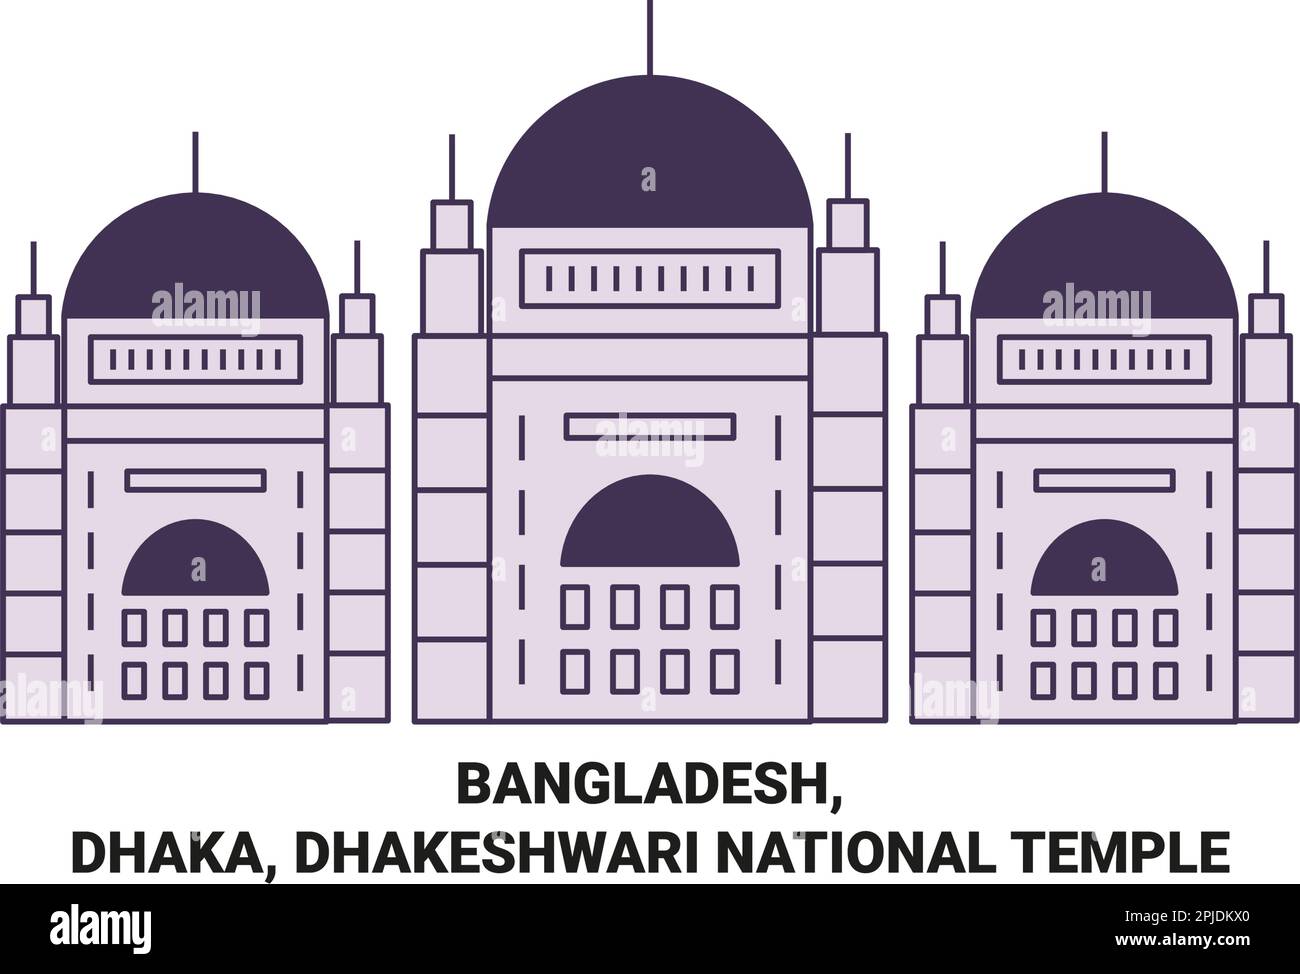 Bangladesh, Dhaka, Dhakeshwari National Temple travel landmark vector illustration Stock Vector